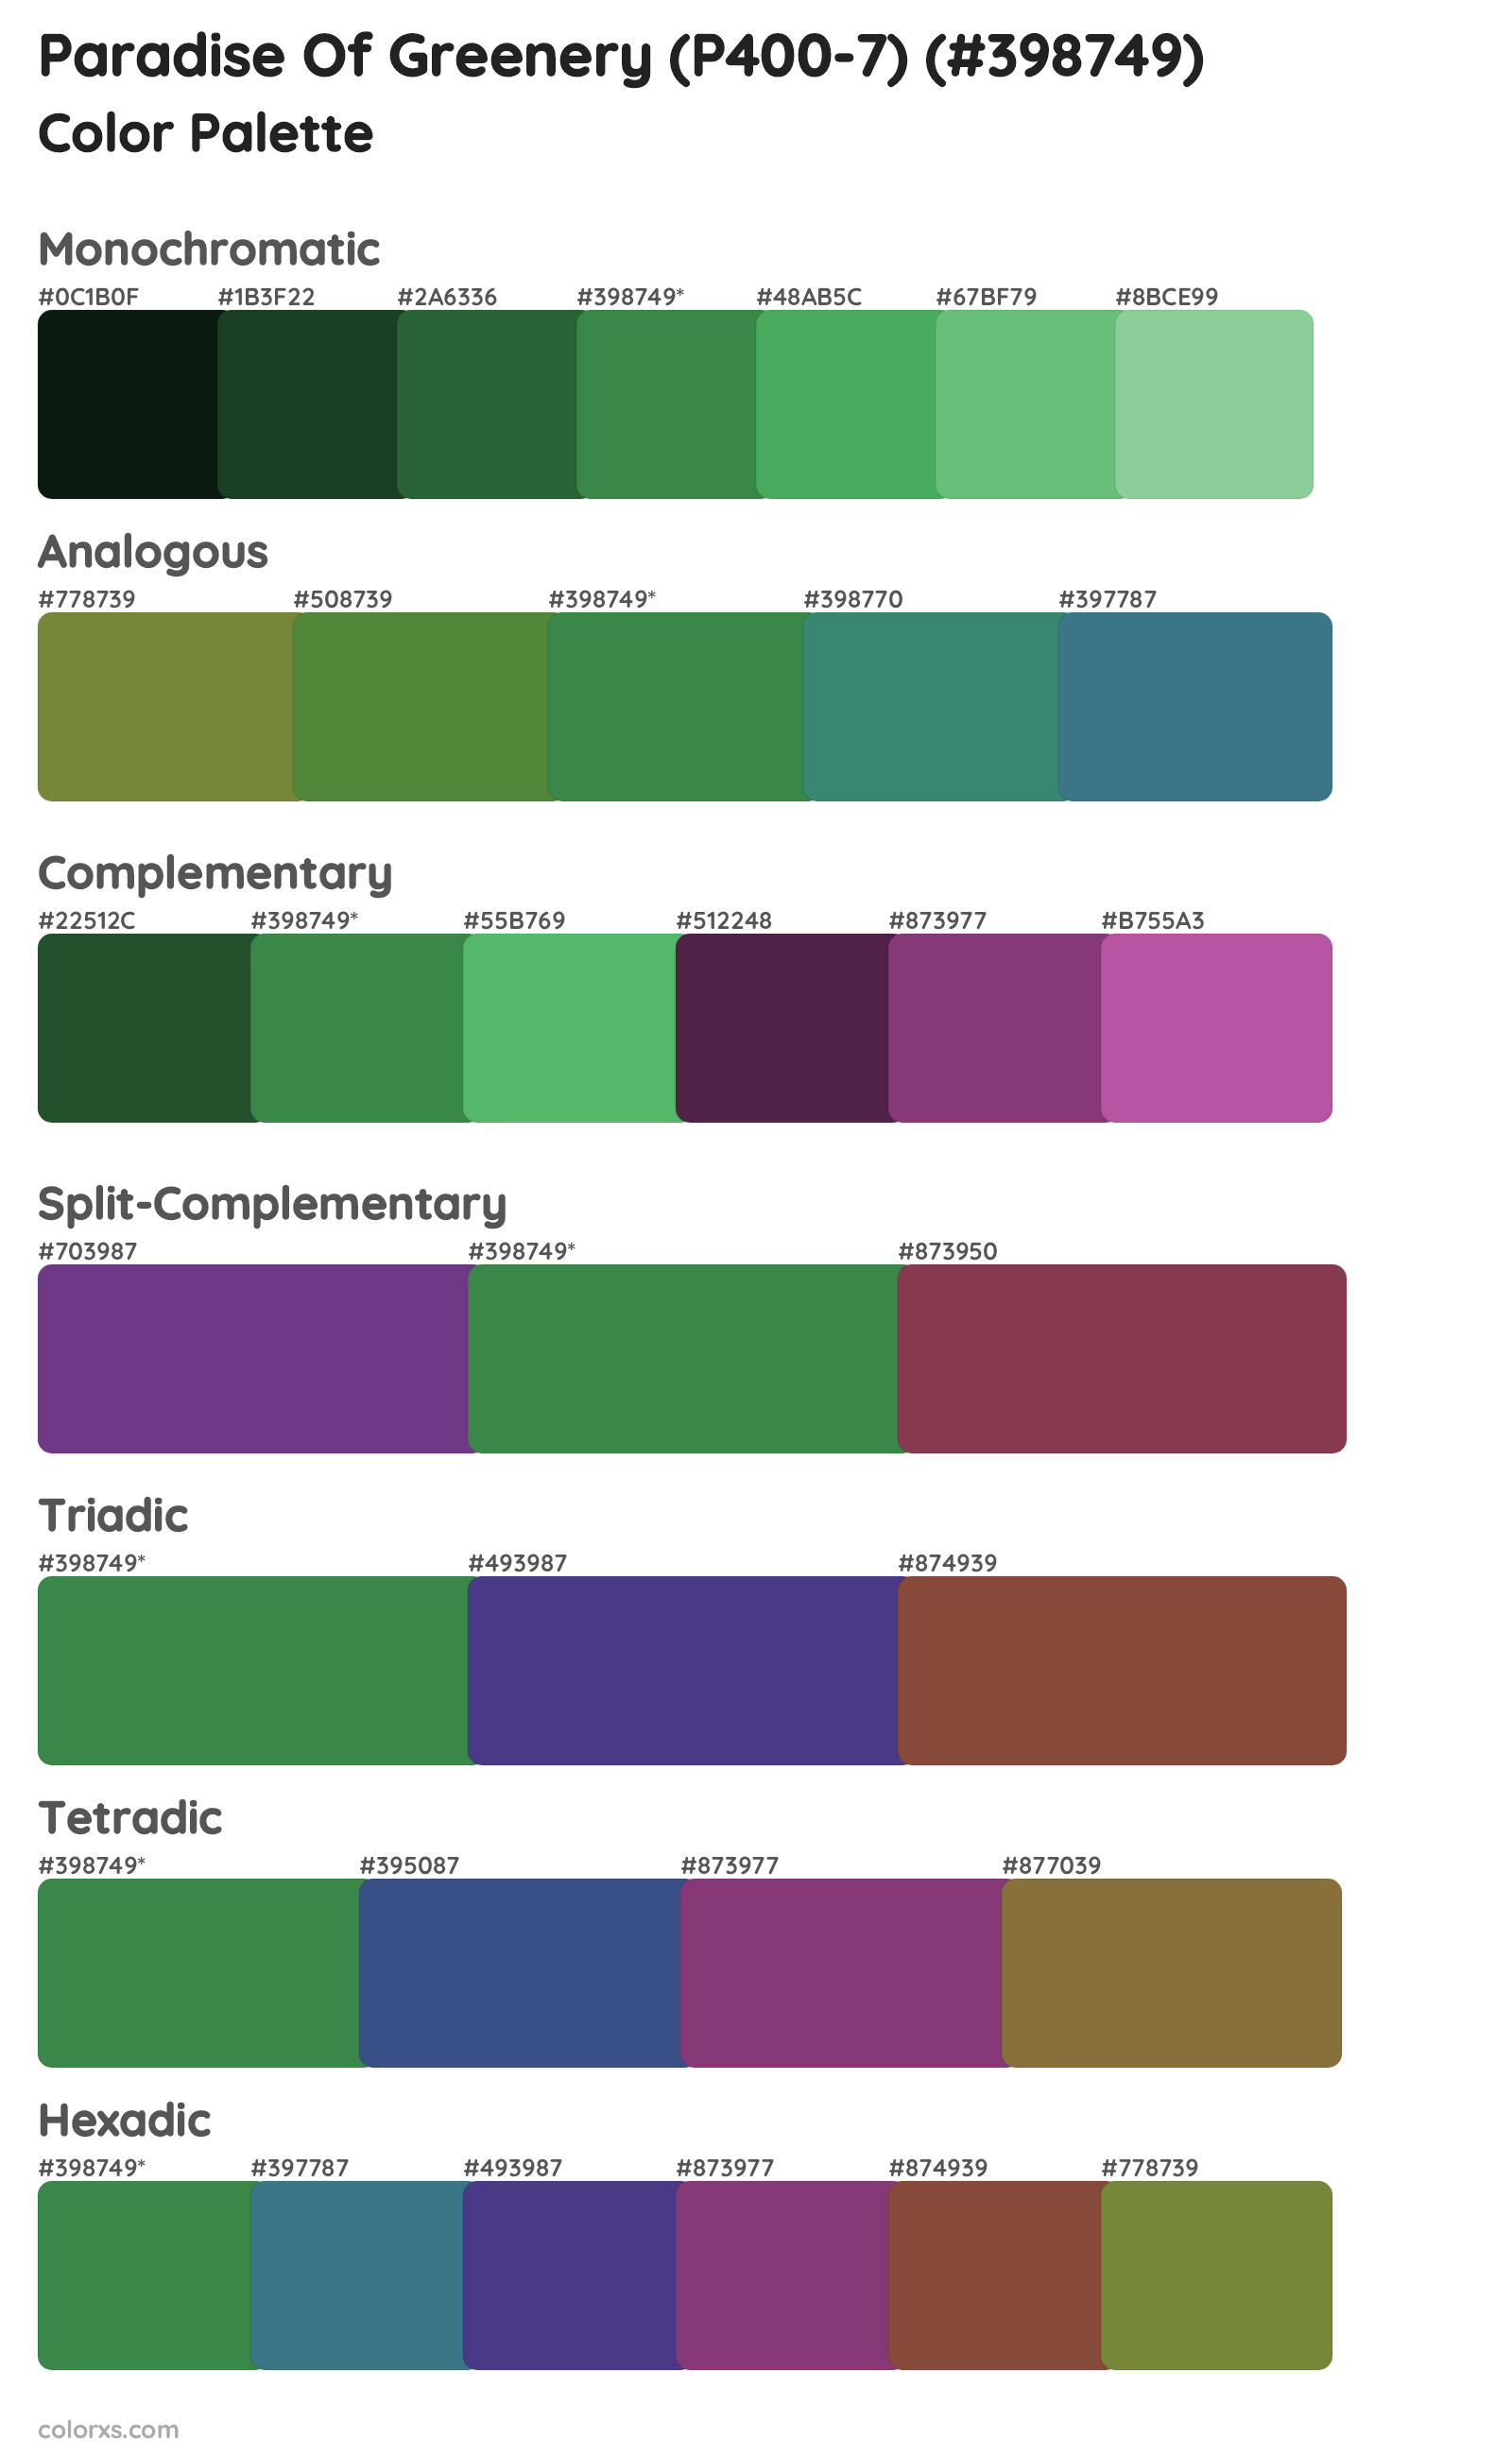 Paradise Of Greenery (P400-7) Color Scheme Palettes